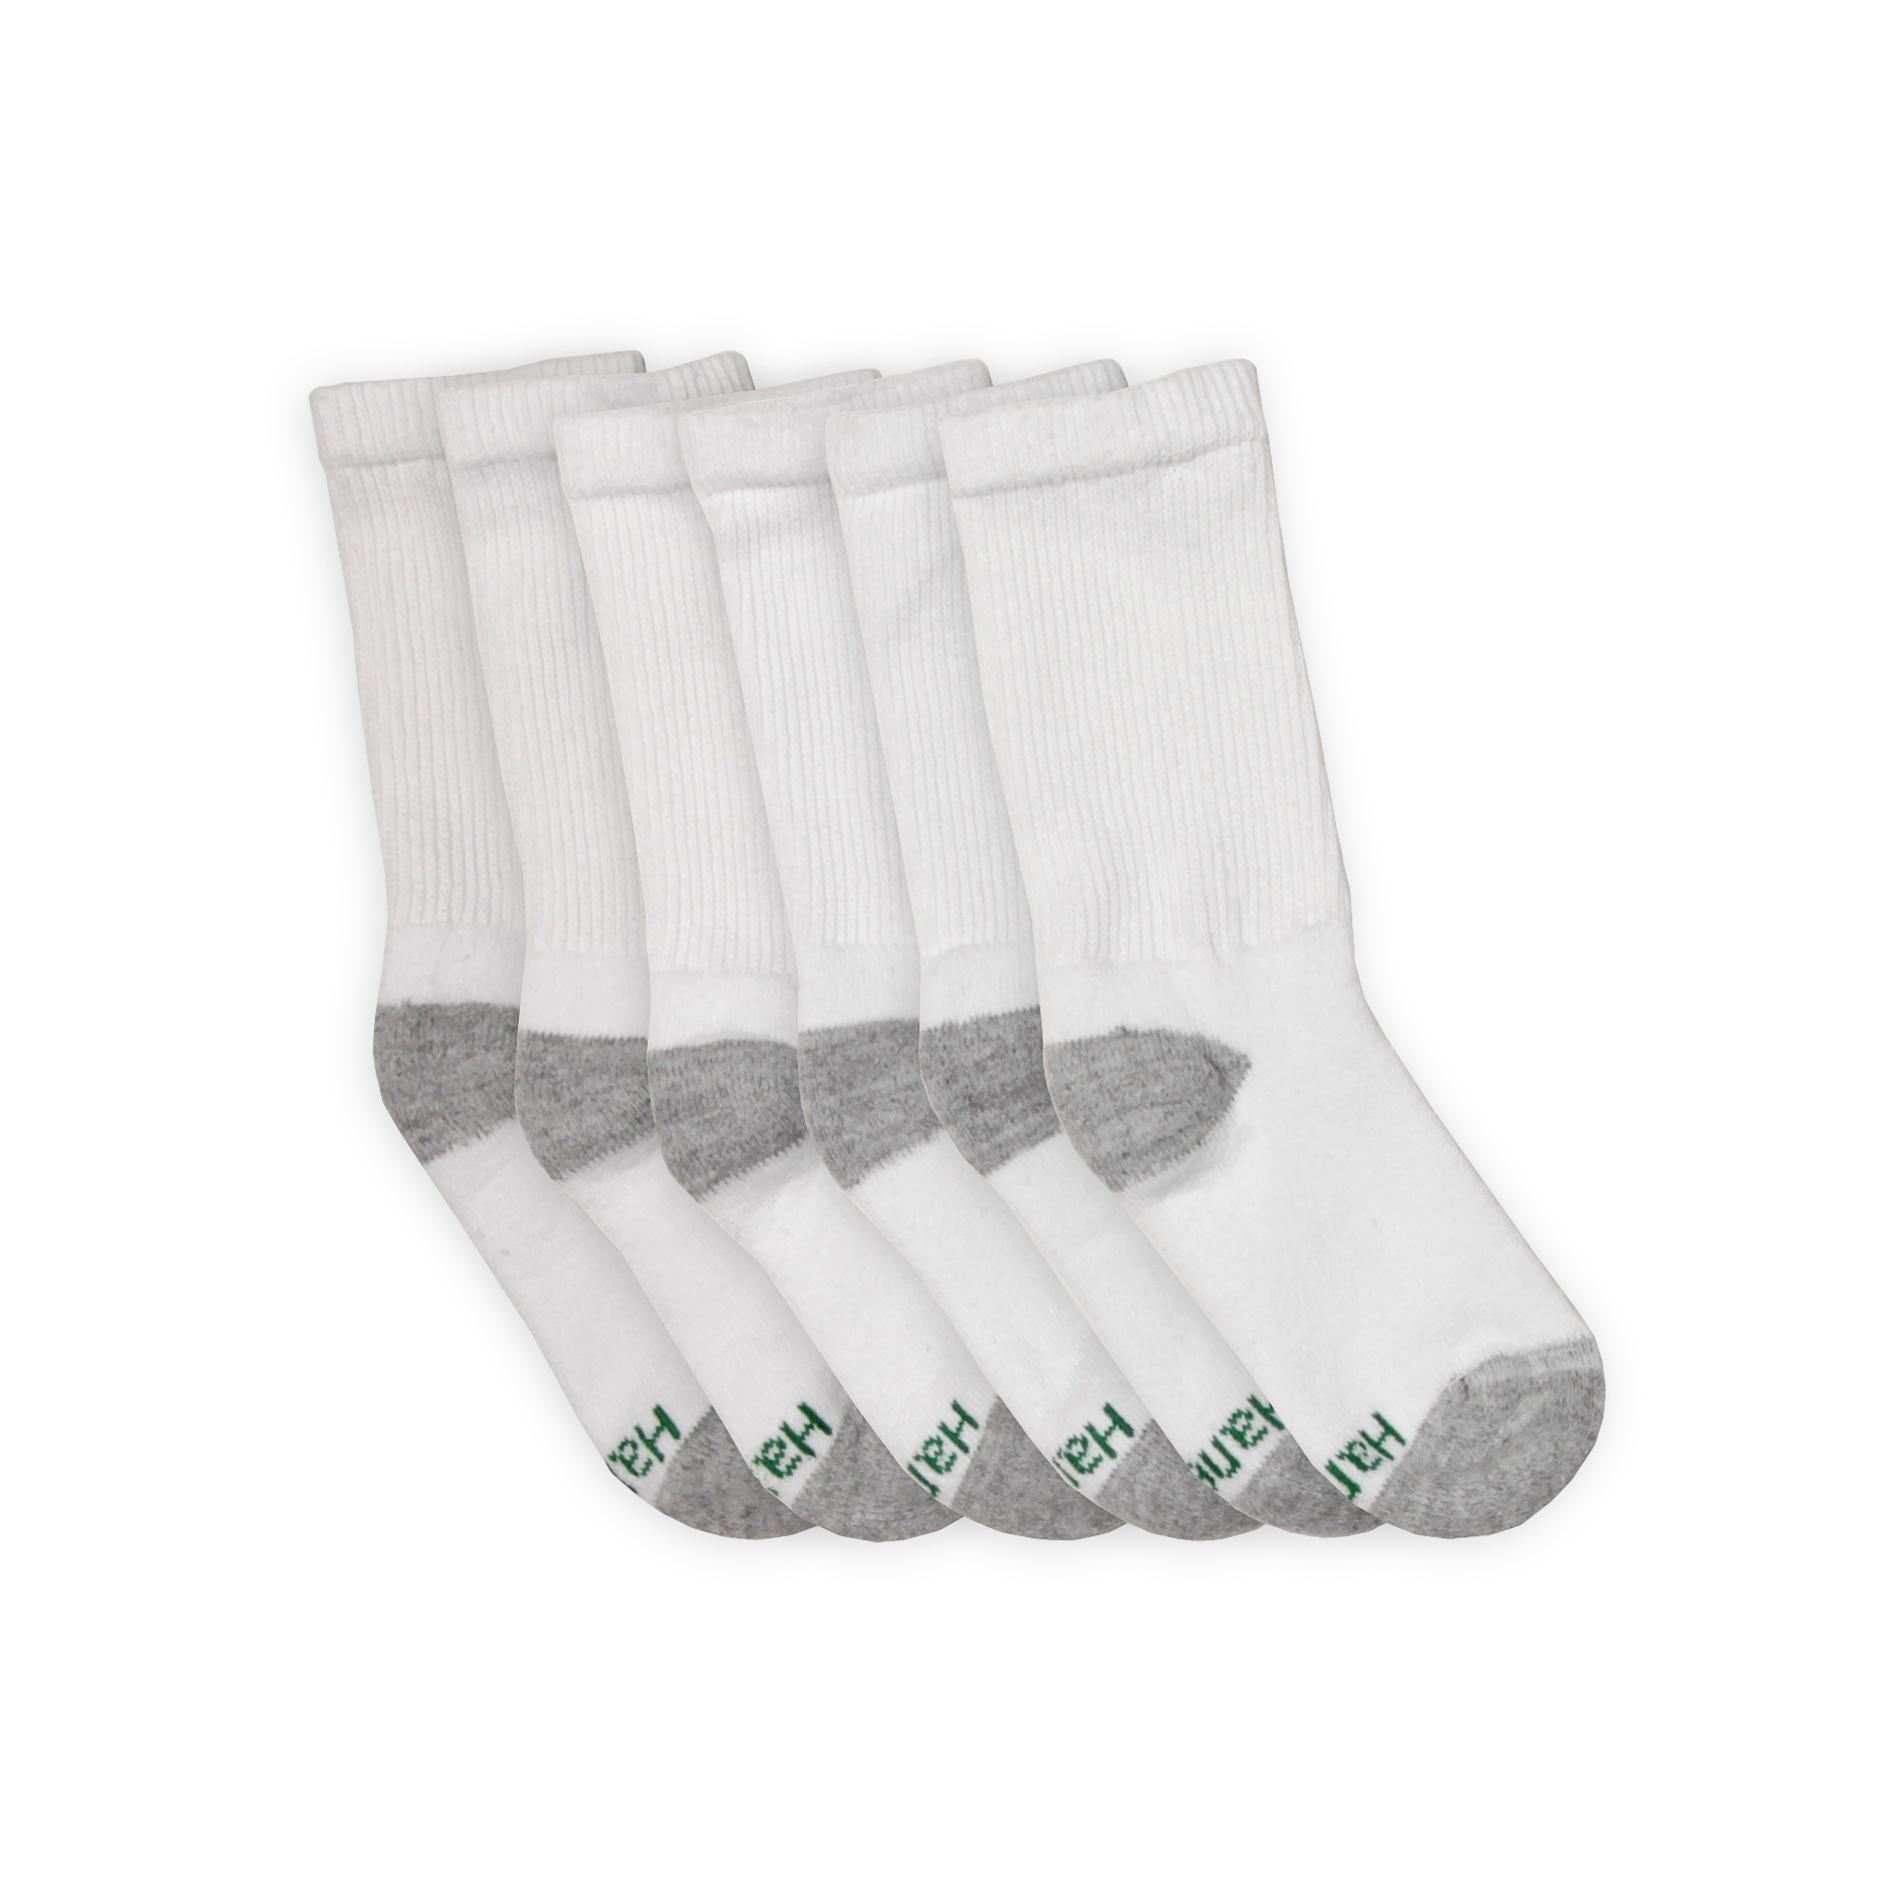 Hanes Boy's 6-Pairs Crew Socks